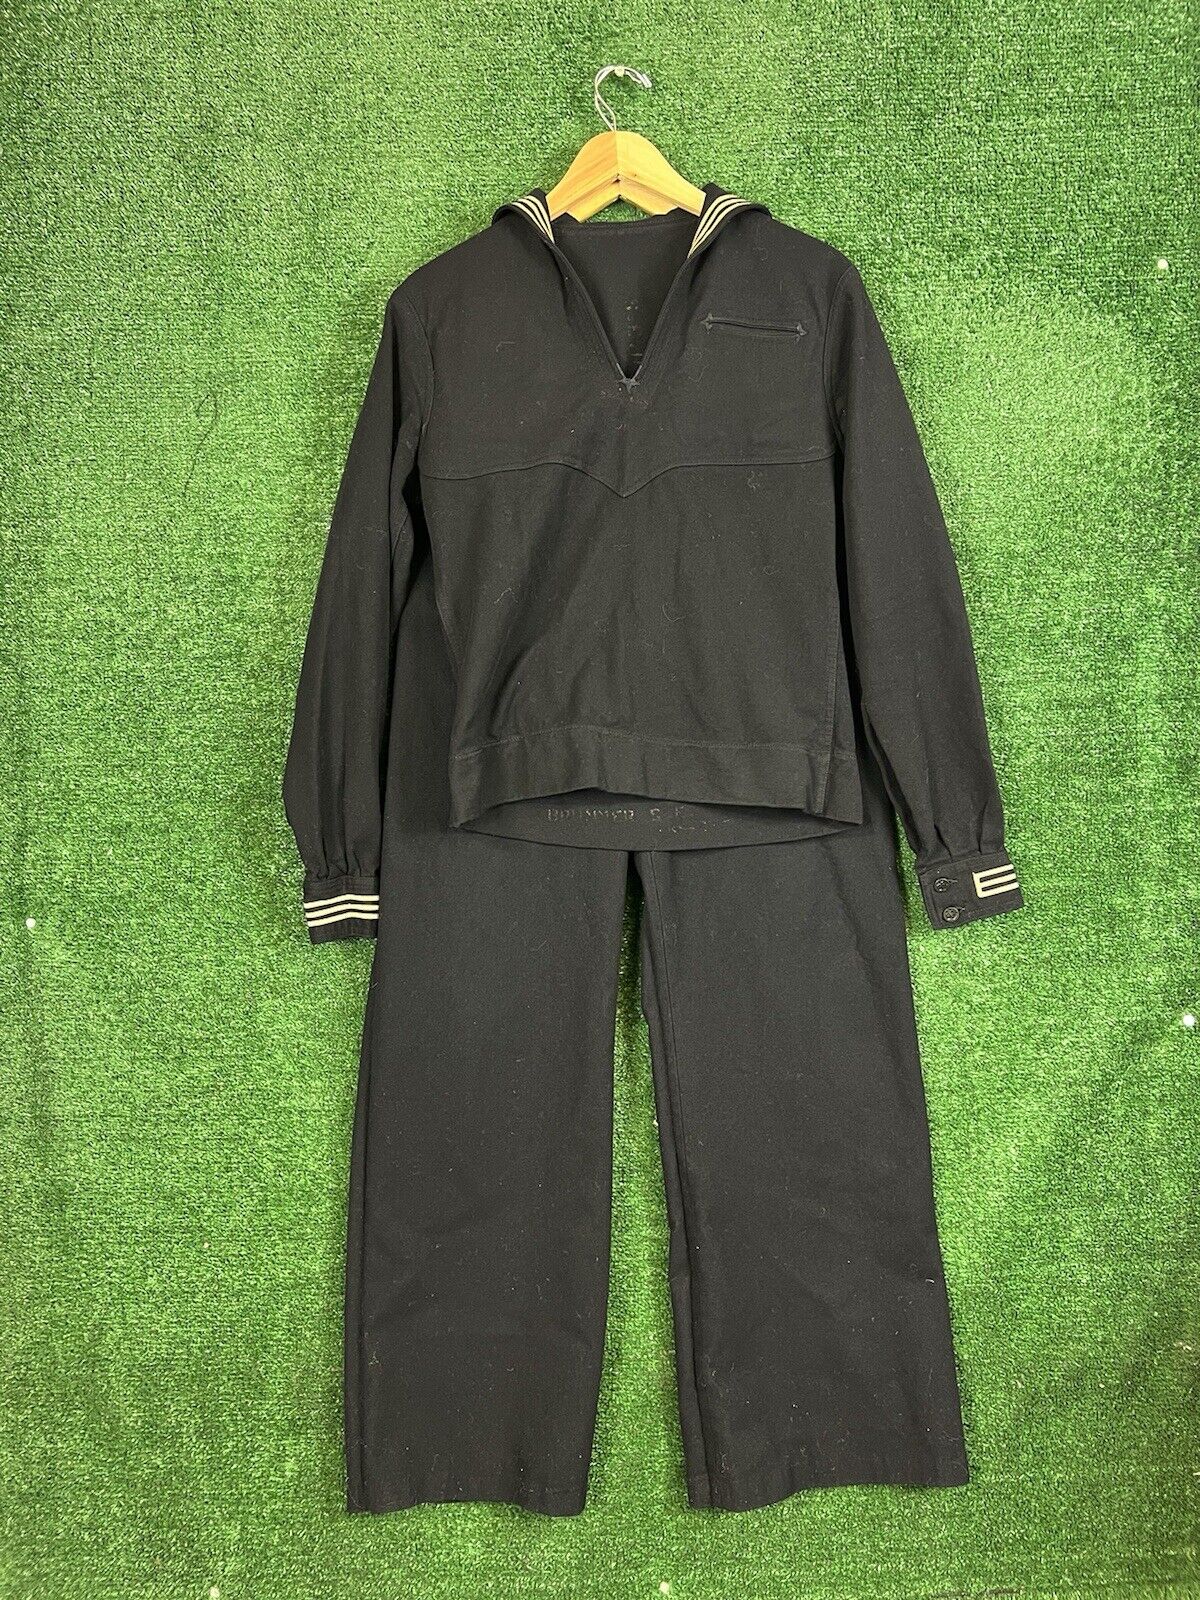 Vintage US Navy Wool Sailor WWII 1940s Naval Cracker Jack Uniform Top / Pants